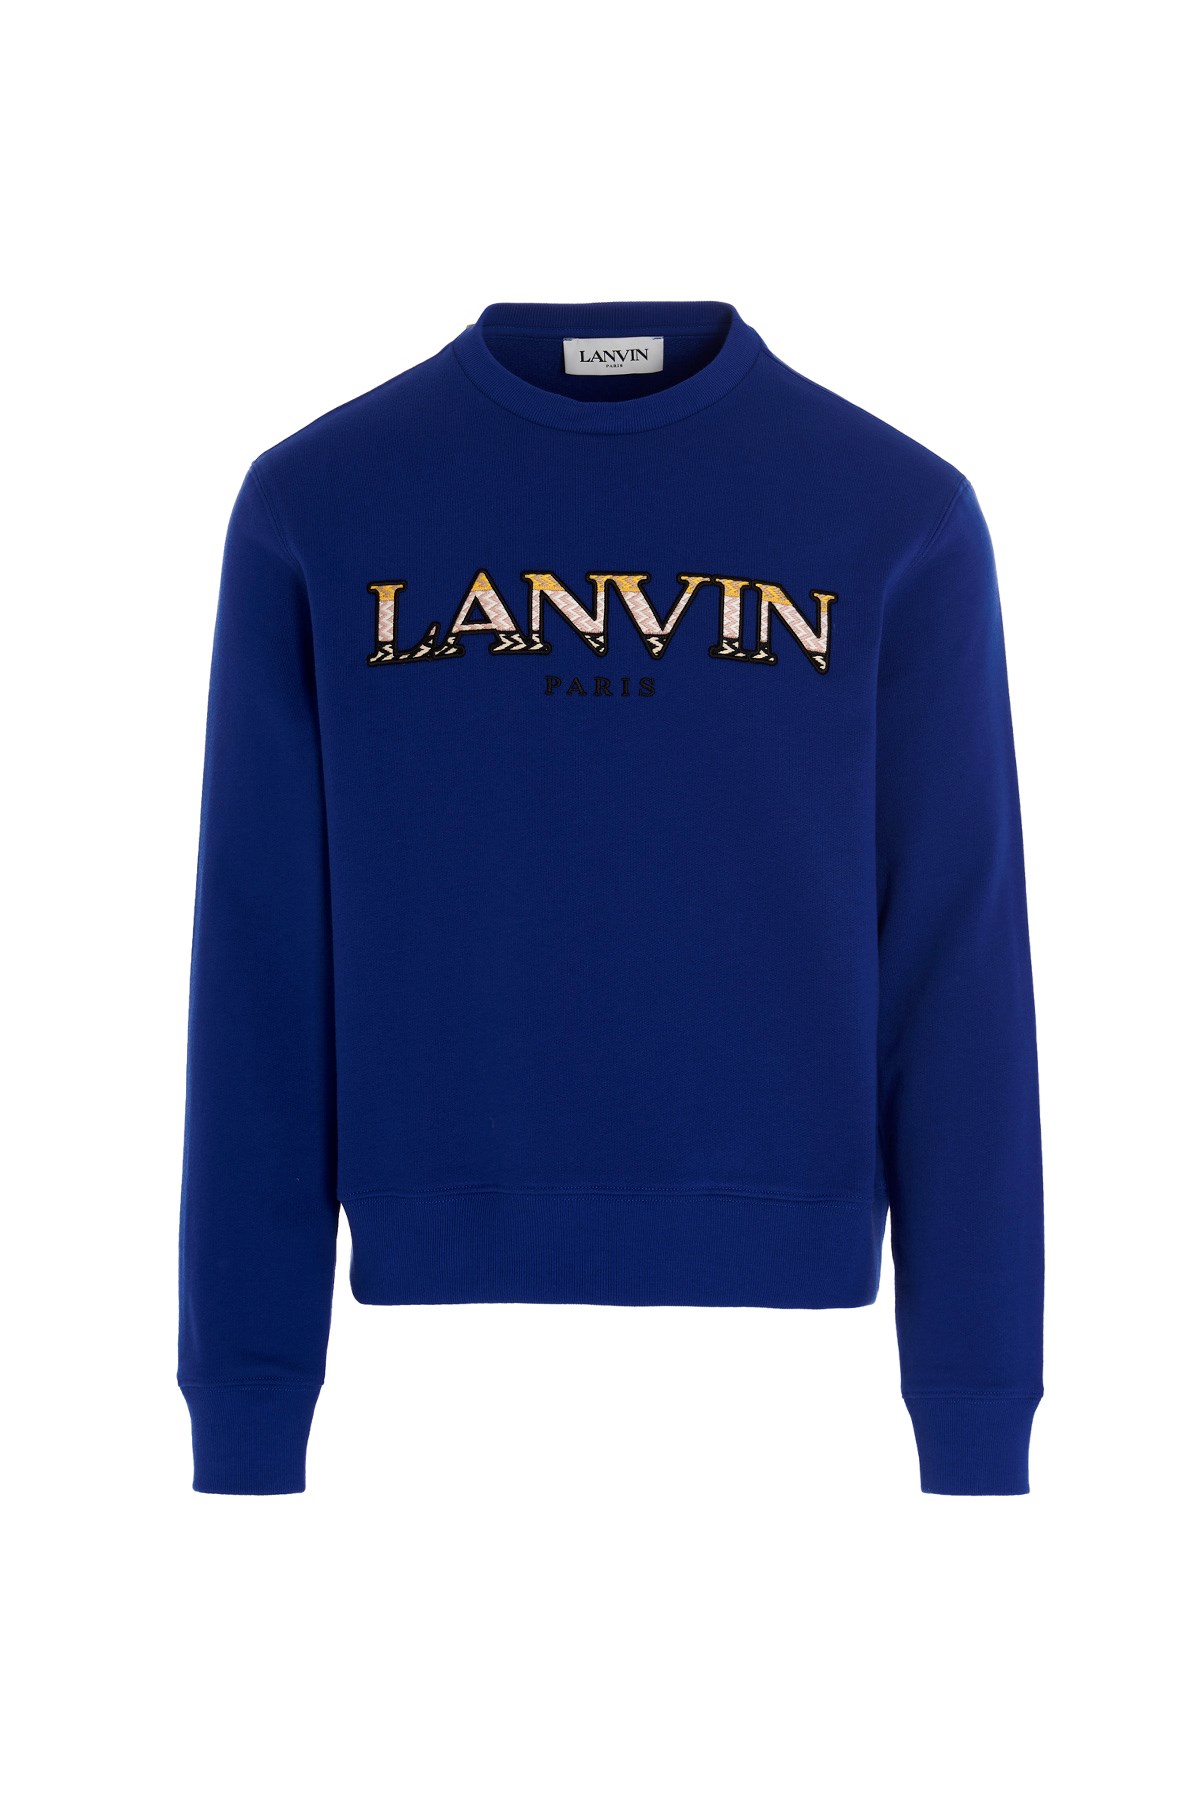 LANVIN Logo Embroidery Sweatshirt